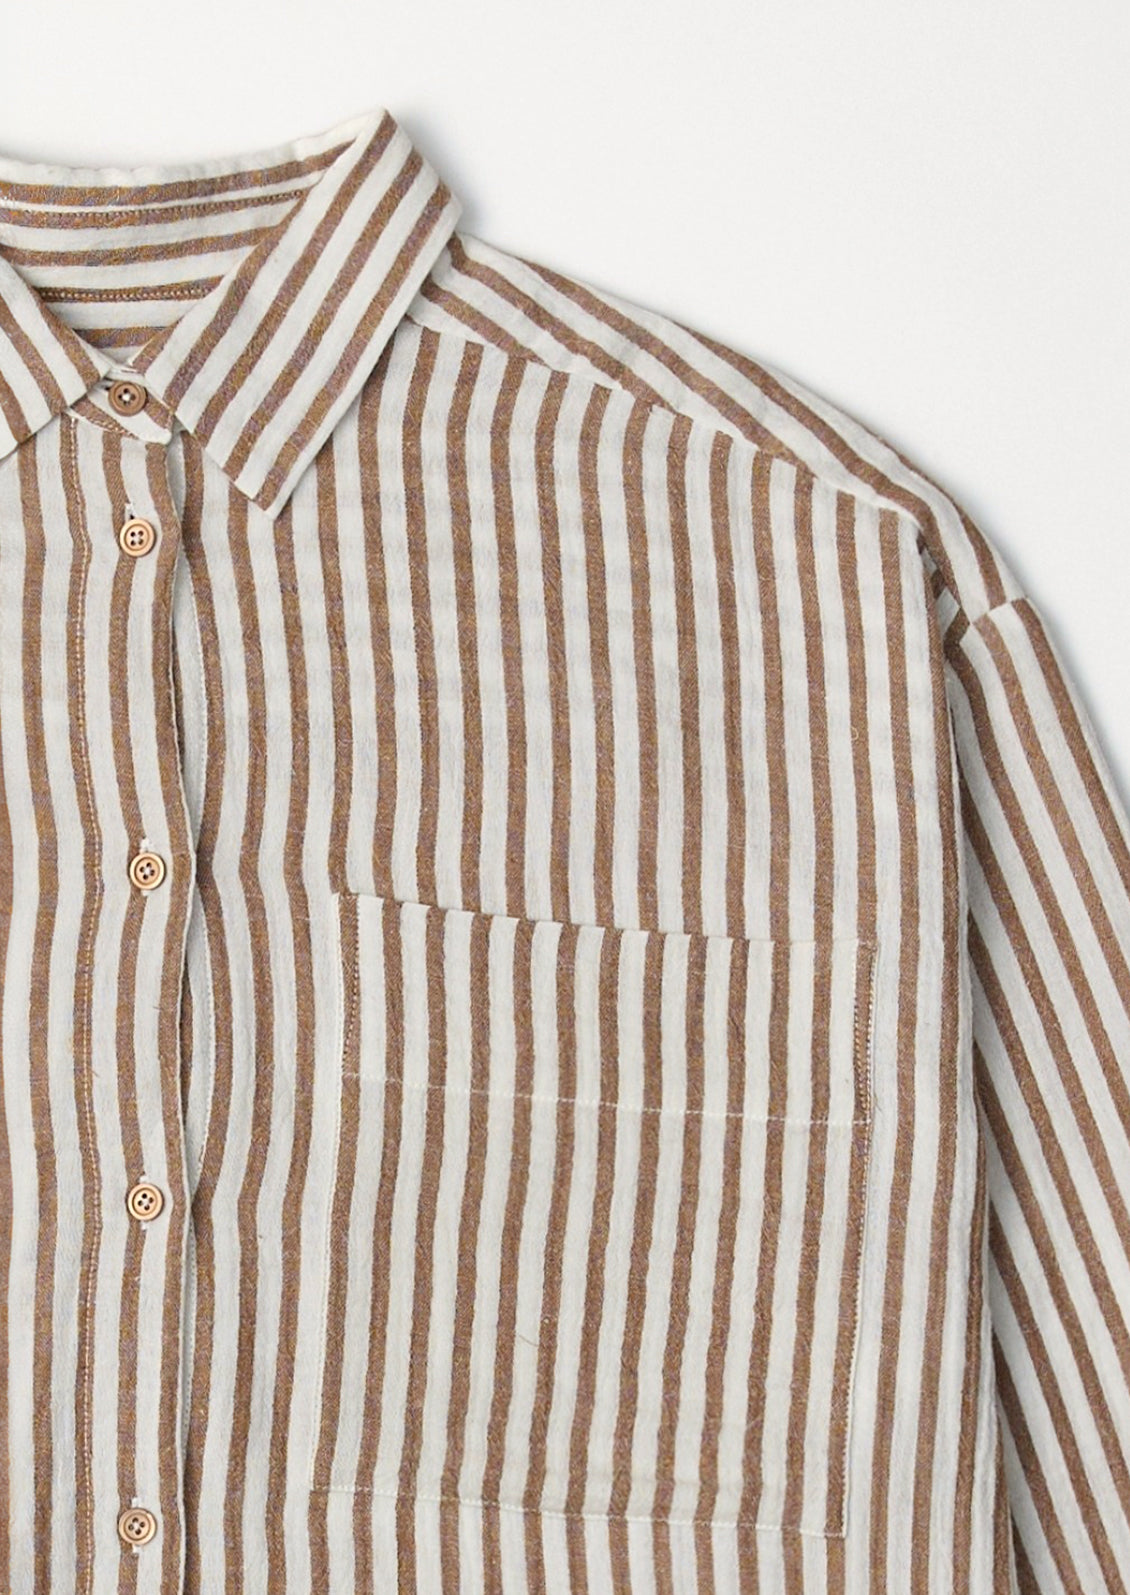 A white and brown stripe cotton gauze button down shirt.